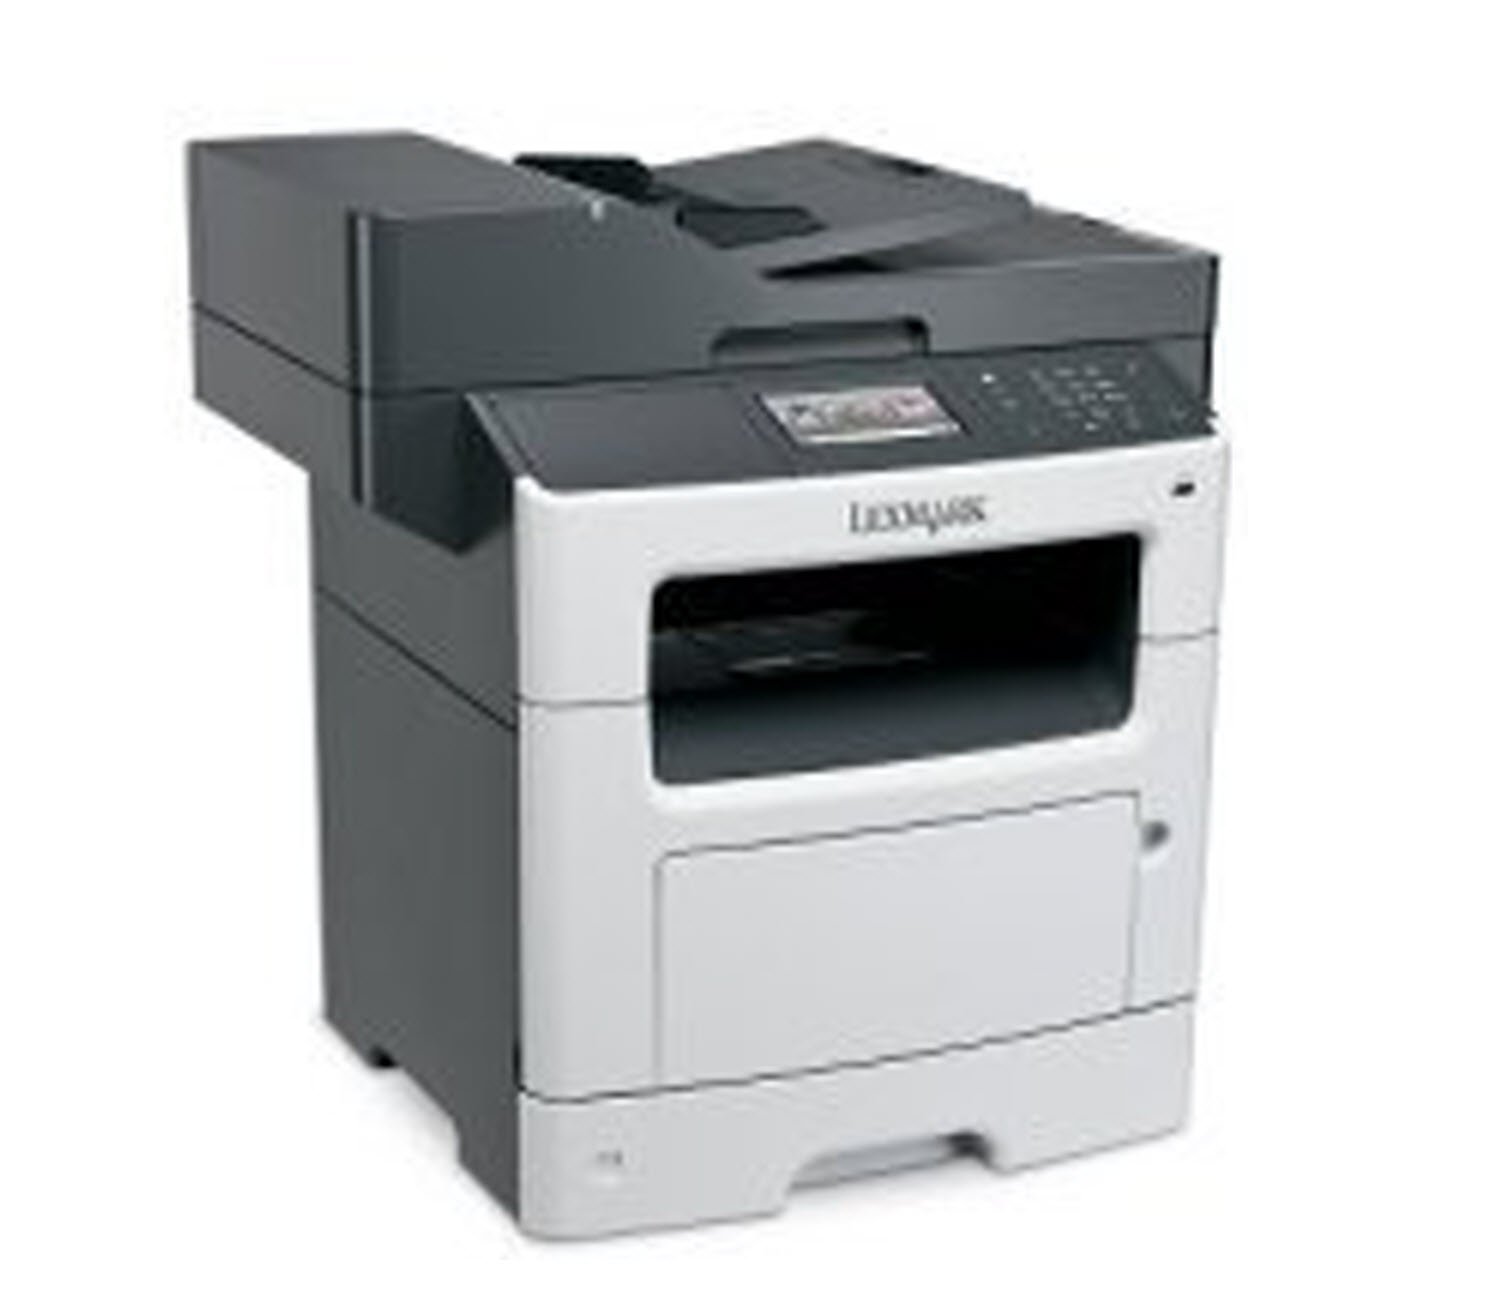 Lexmark MX511de Monochrome All-In One Laser Printer